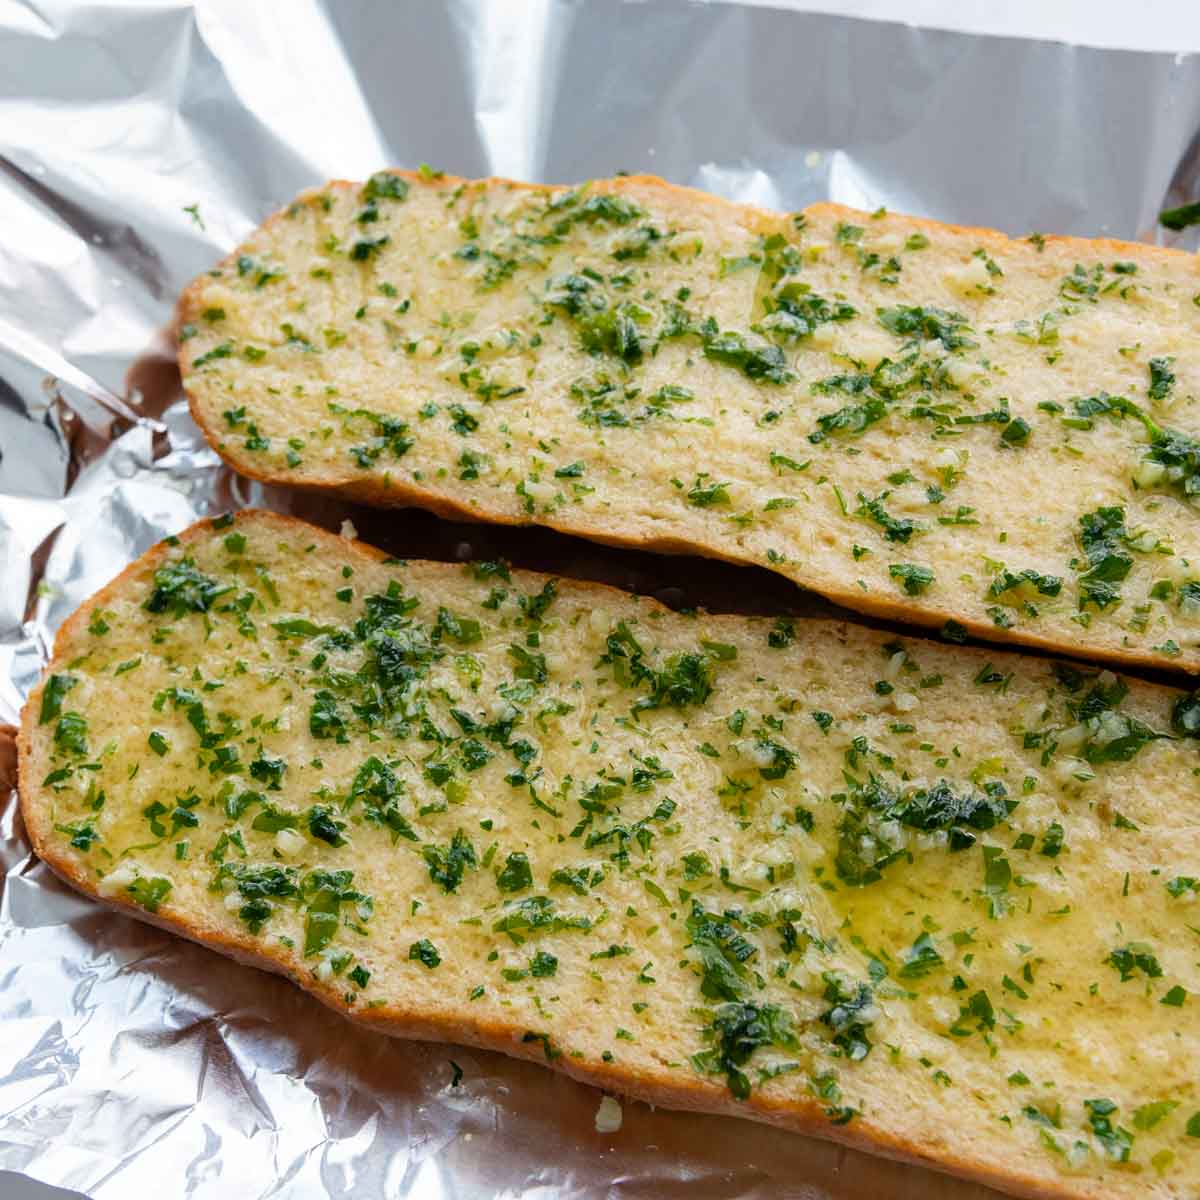 garlic butter spread on two bread halves.